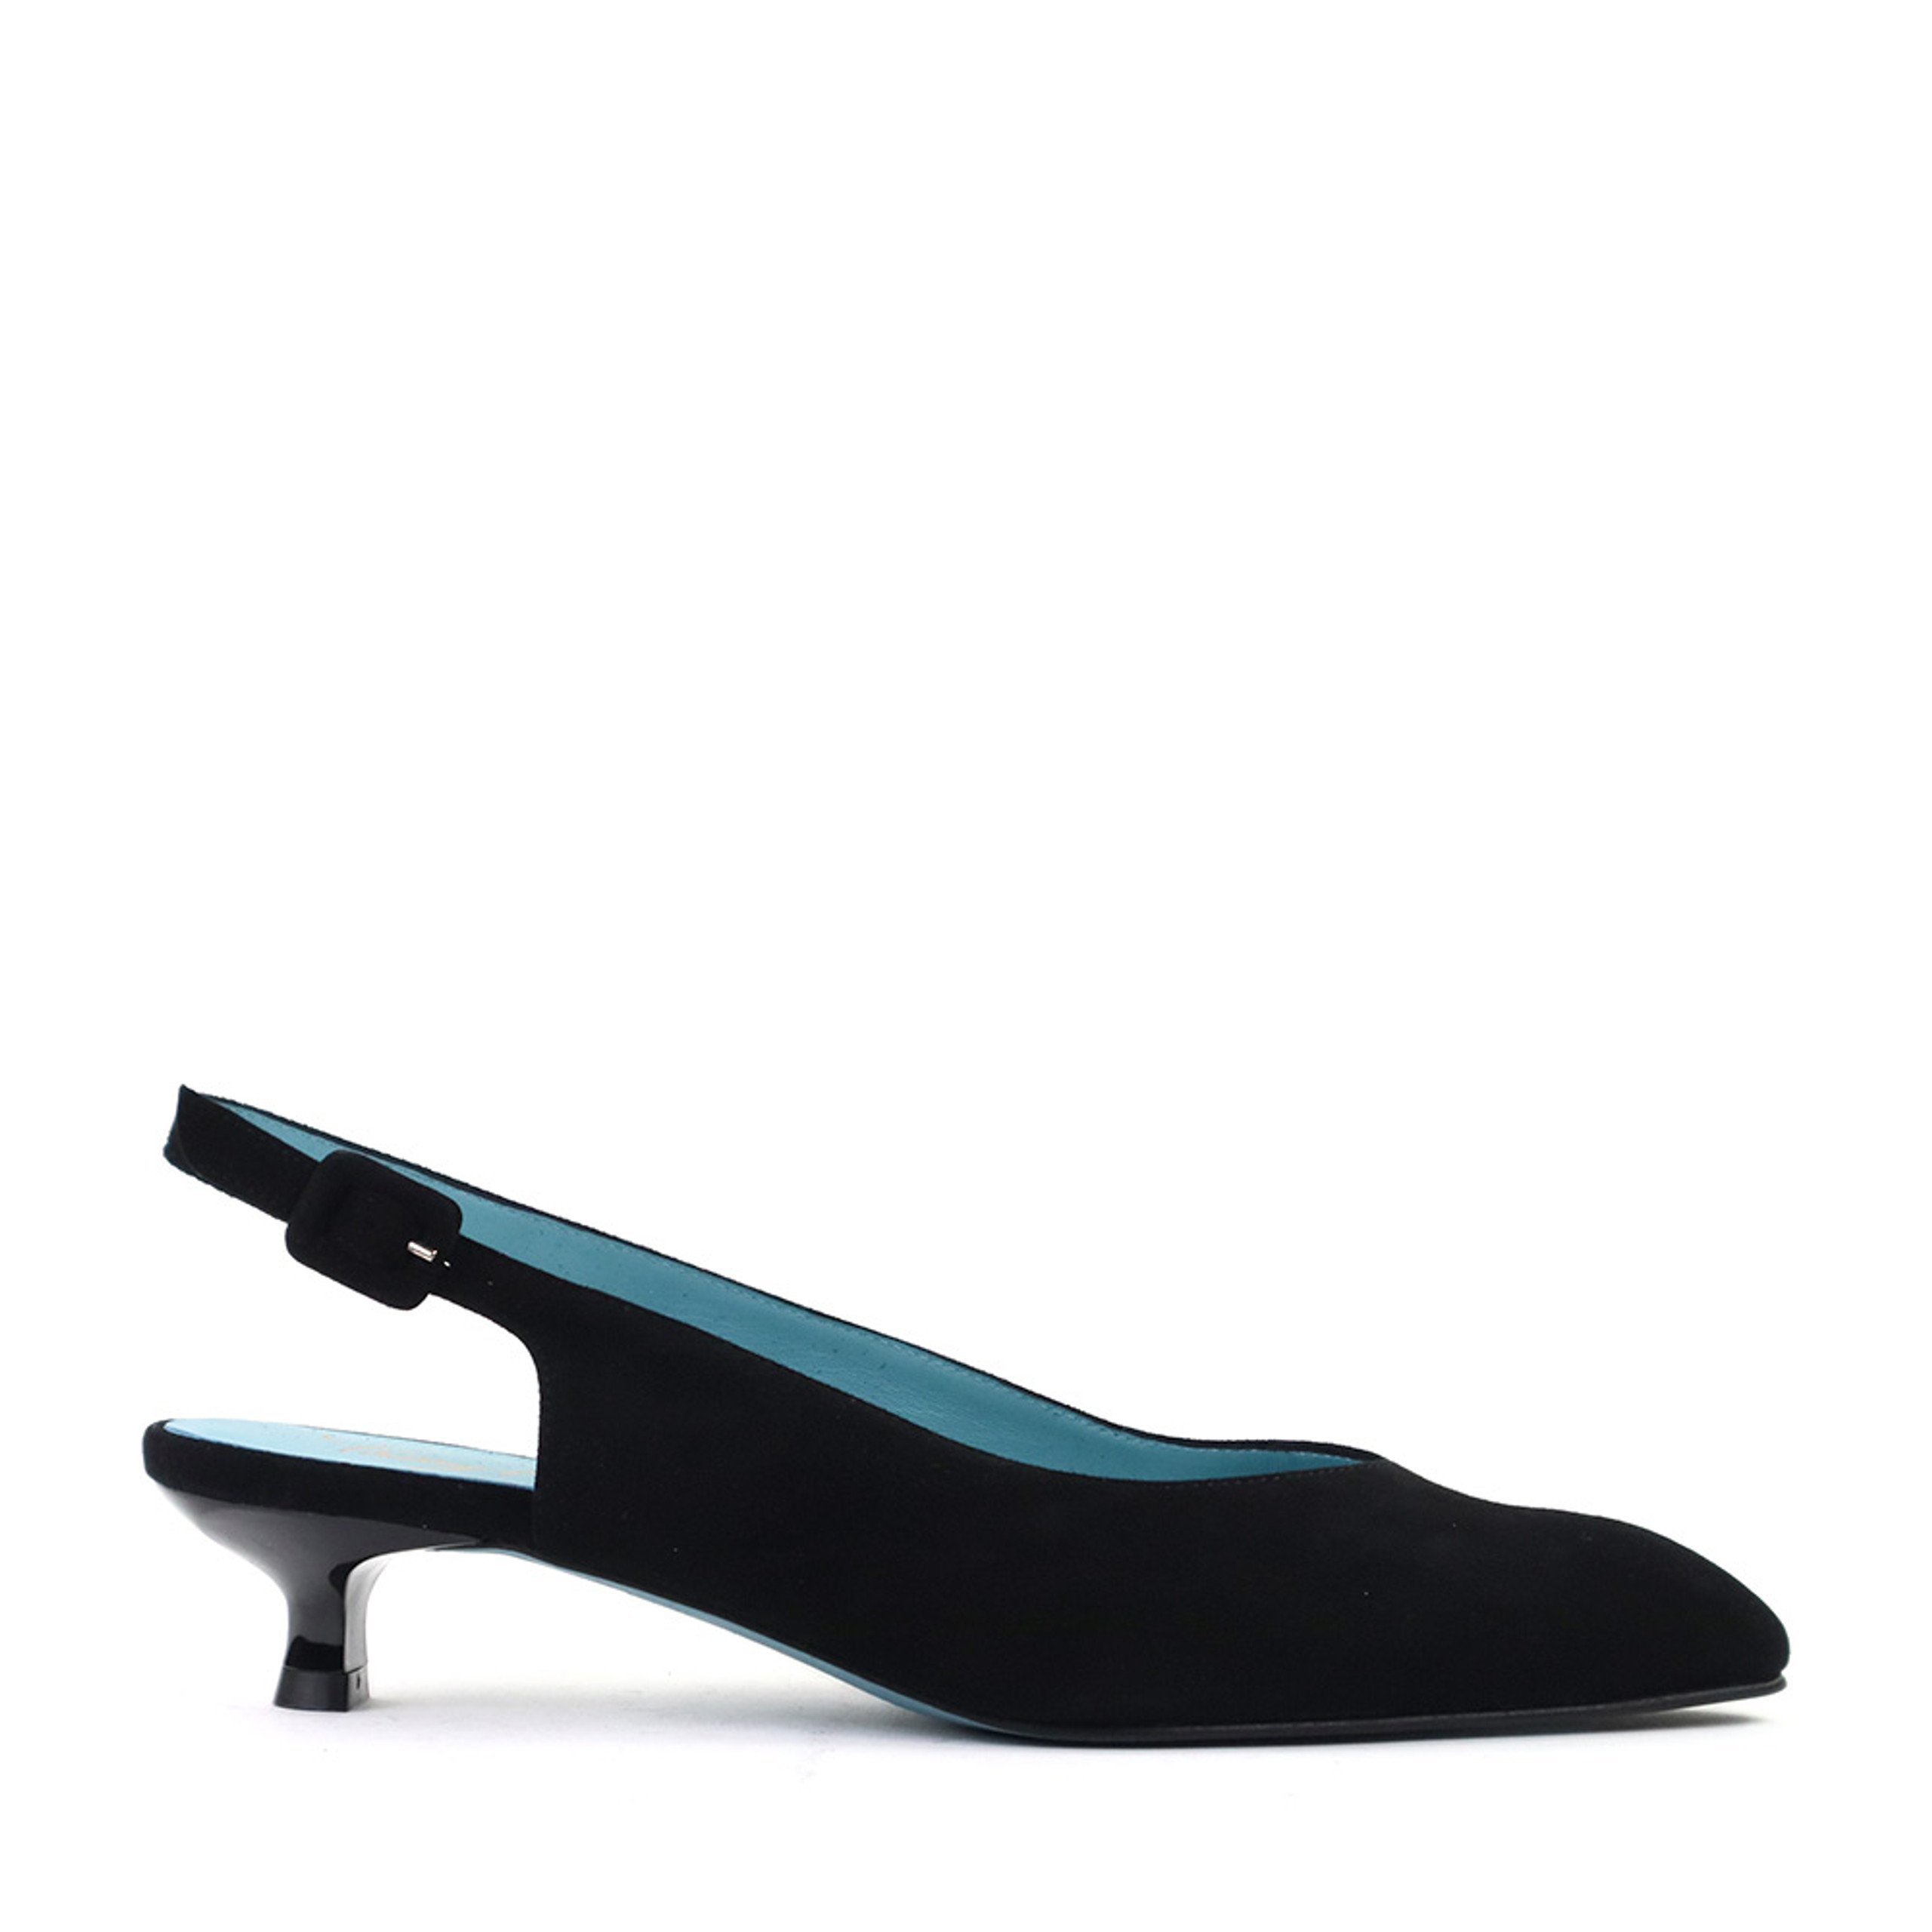 Thierry Rabotin - Comfortable Designer Shoes | Hanig's Footwear